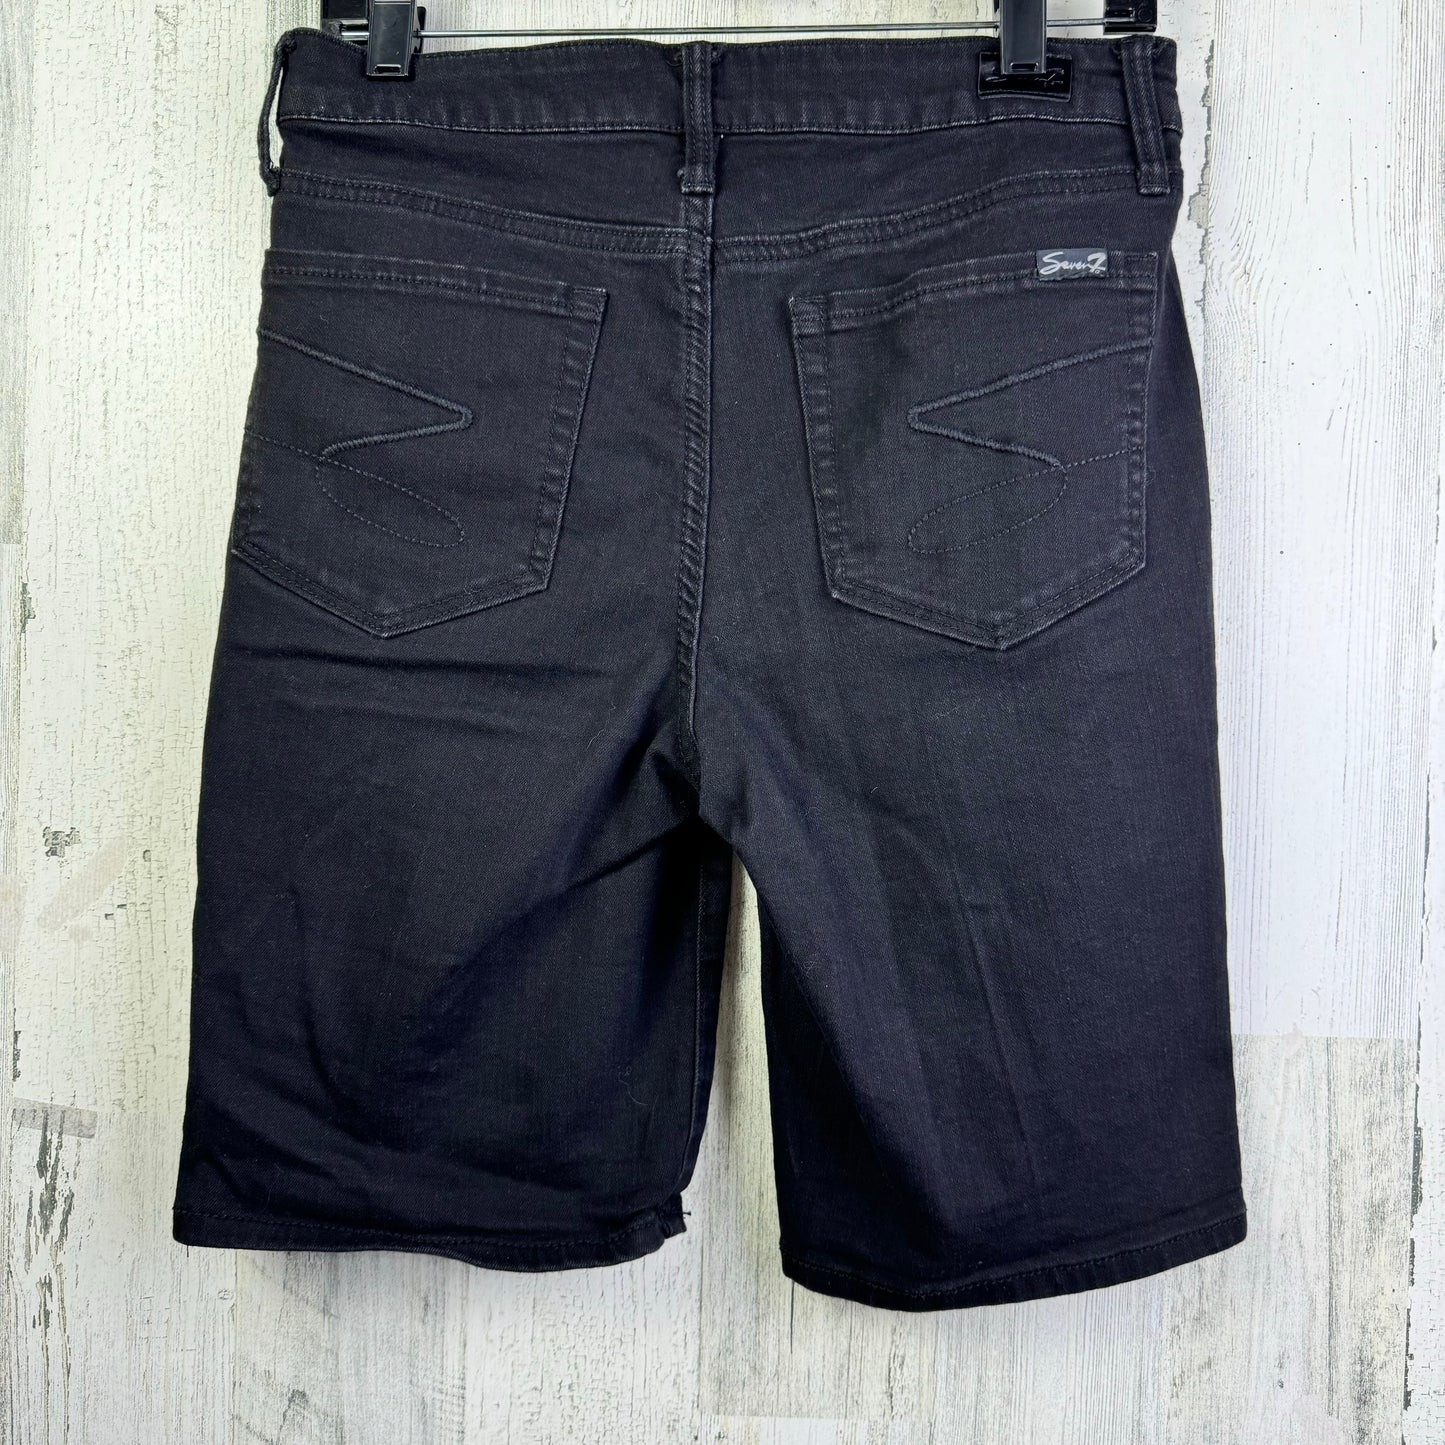 Black Denim Shorts Seven 7, Size 8